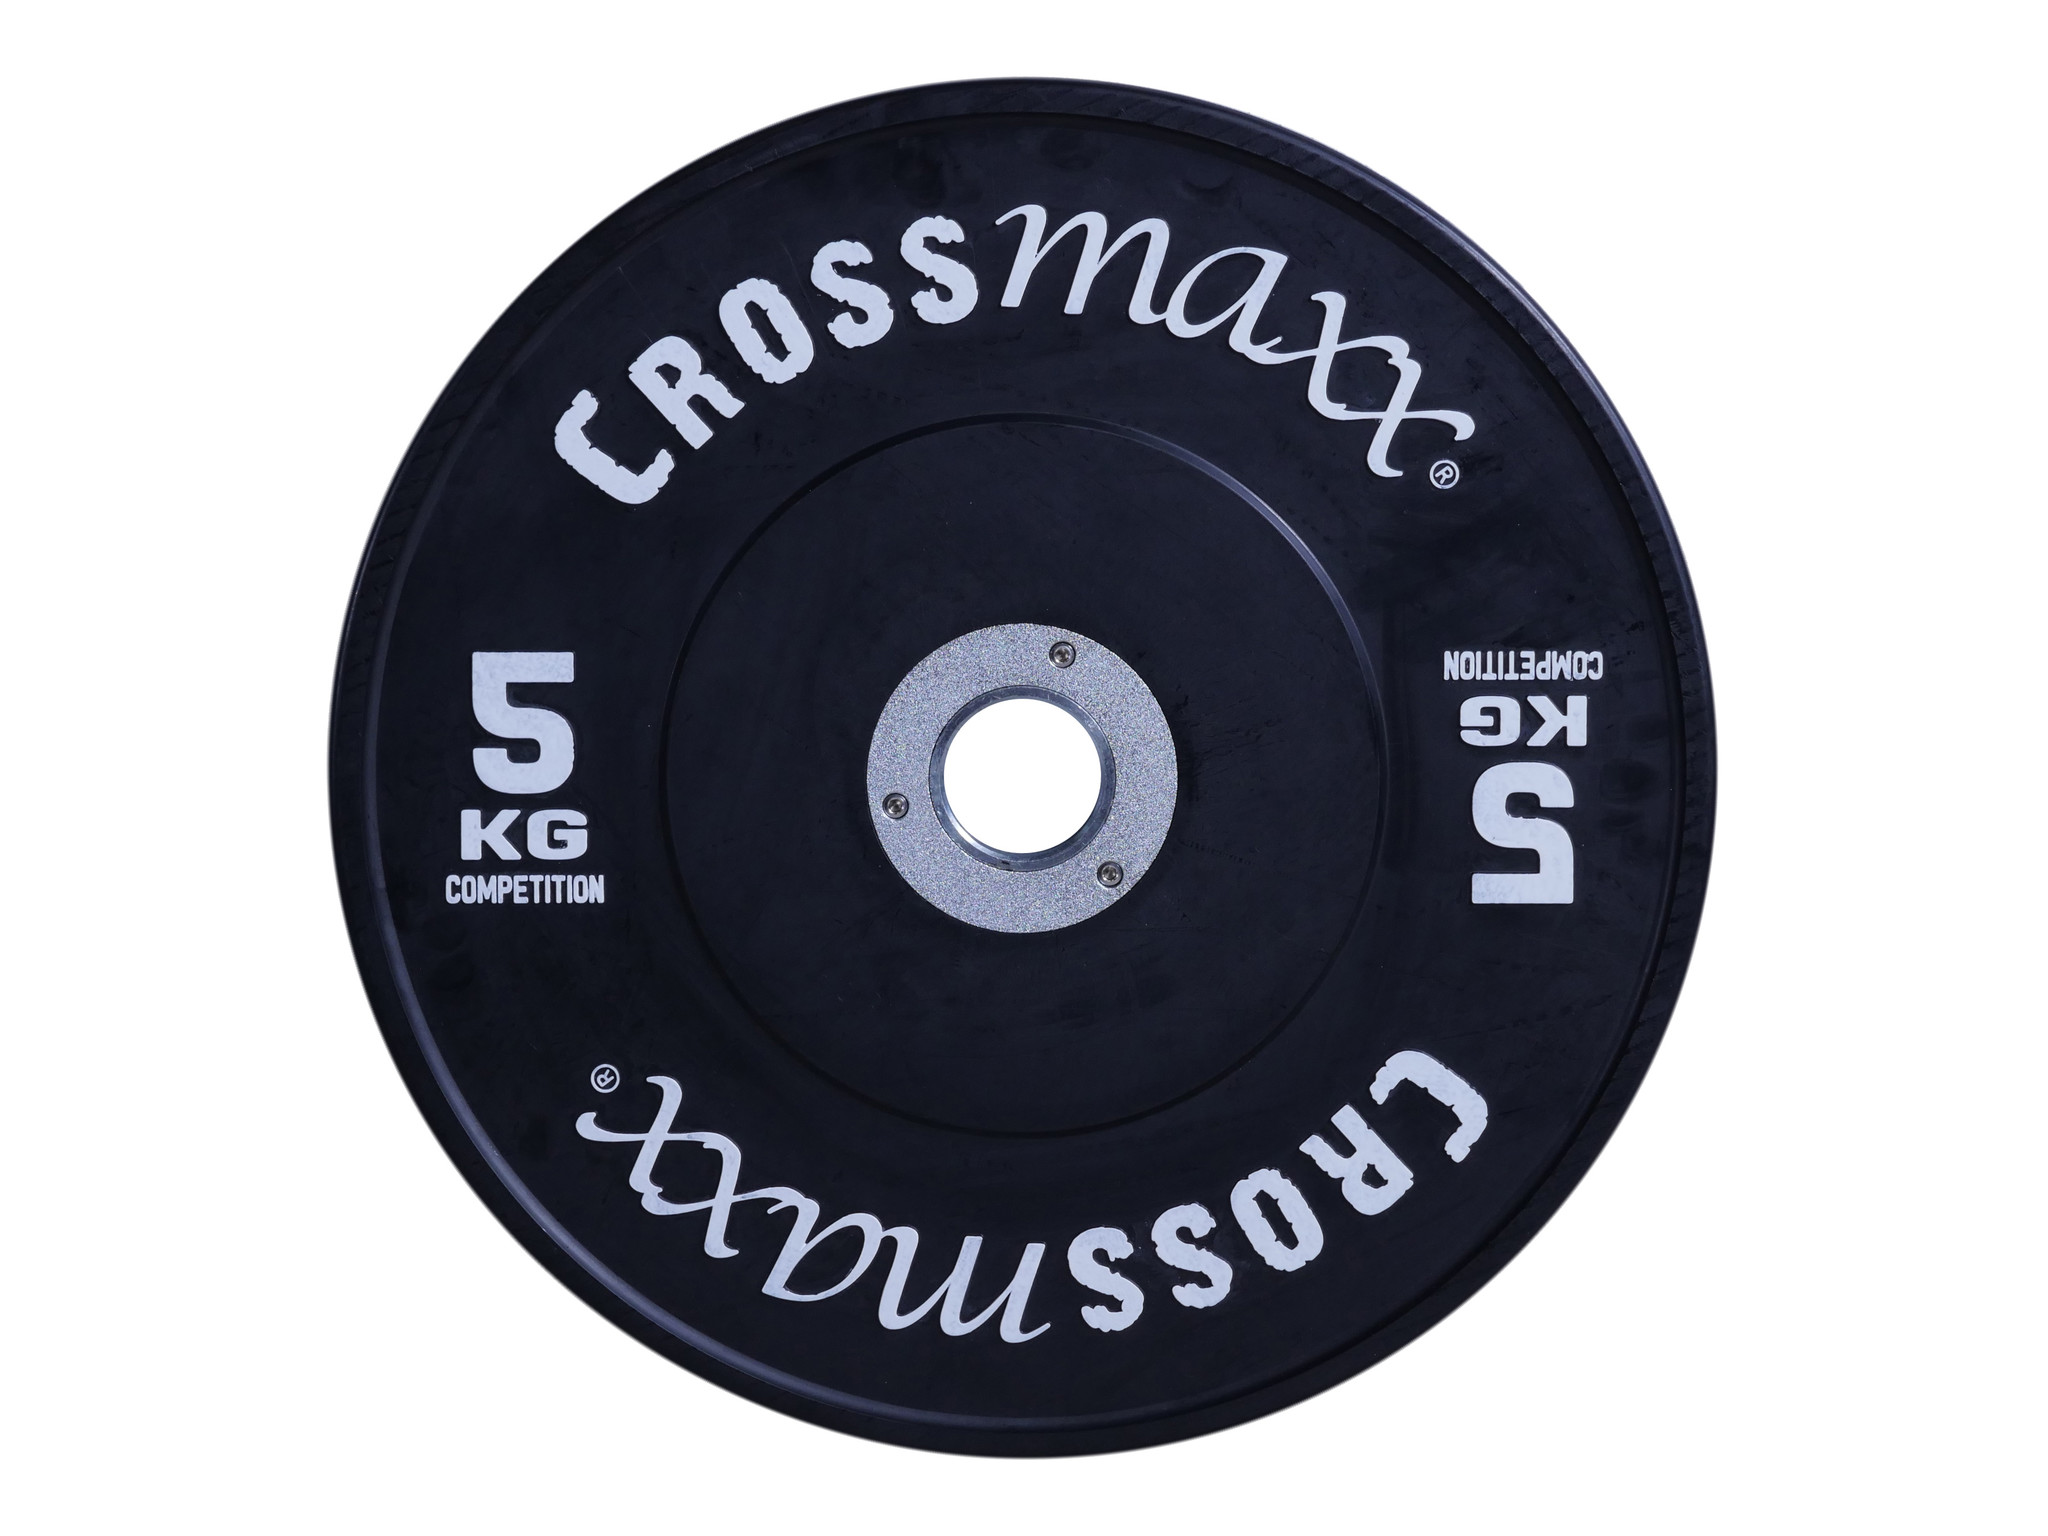 Crossmaxx Competition Bumper Plate 5 kg Black thumbnail